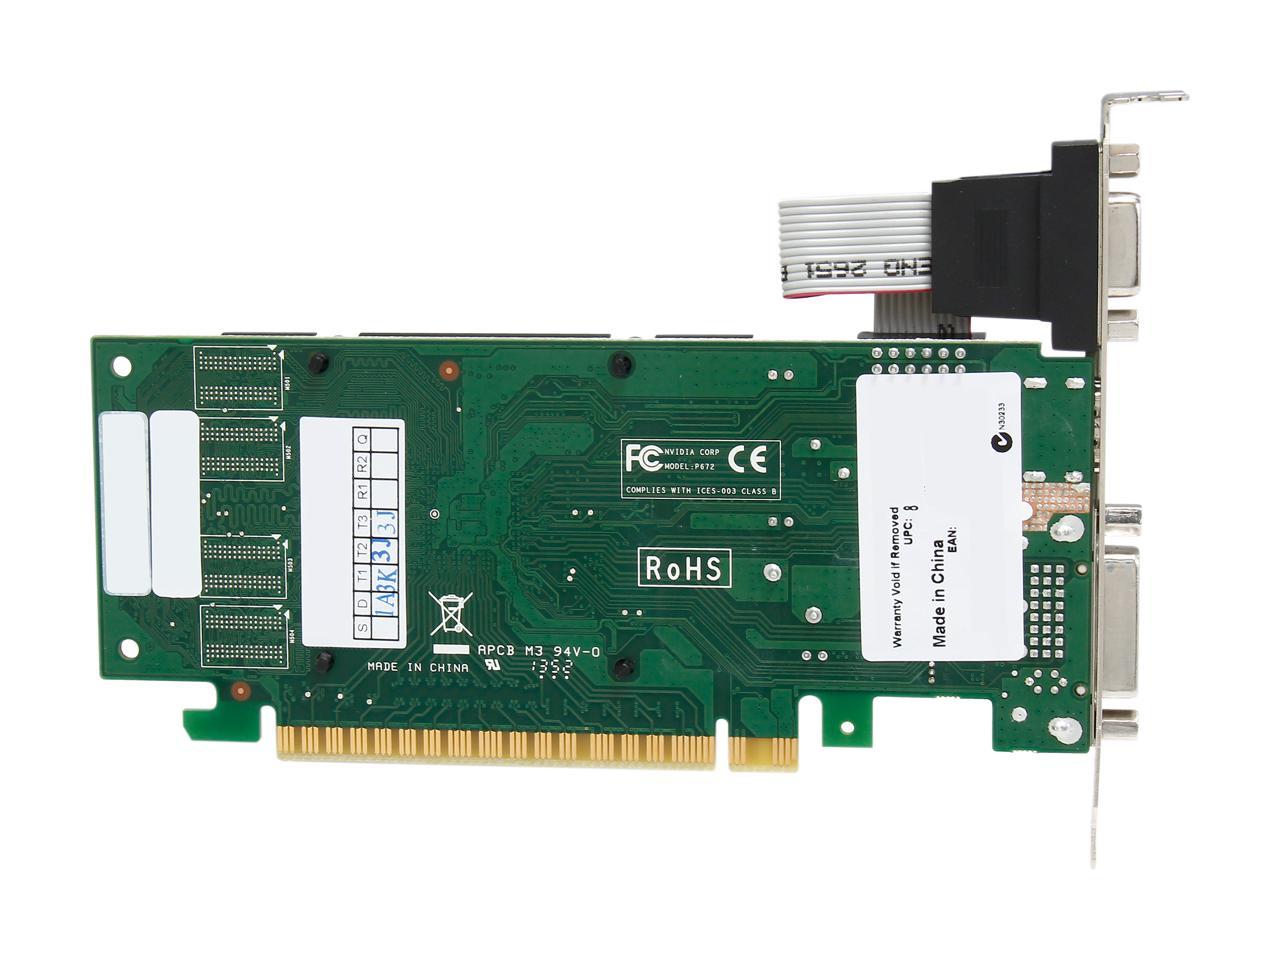 EVGA GeForce 210 DirectX 10.1 01G-P3-1313-KR 1GB 64-Bit DDR3 PCI Express 2.0 HDCP Ready Low Profile Ready Video Card